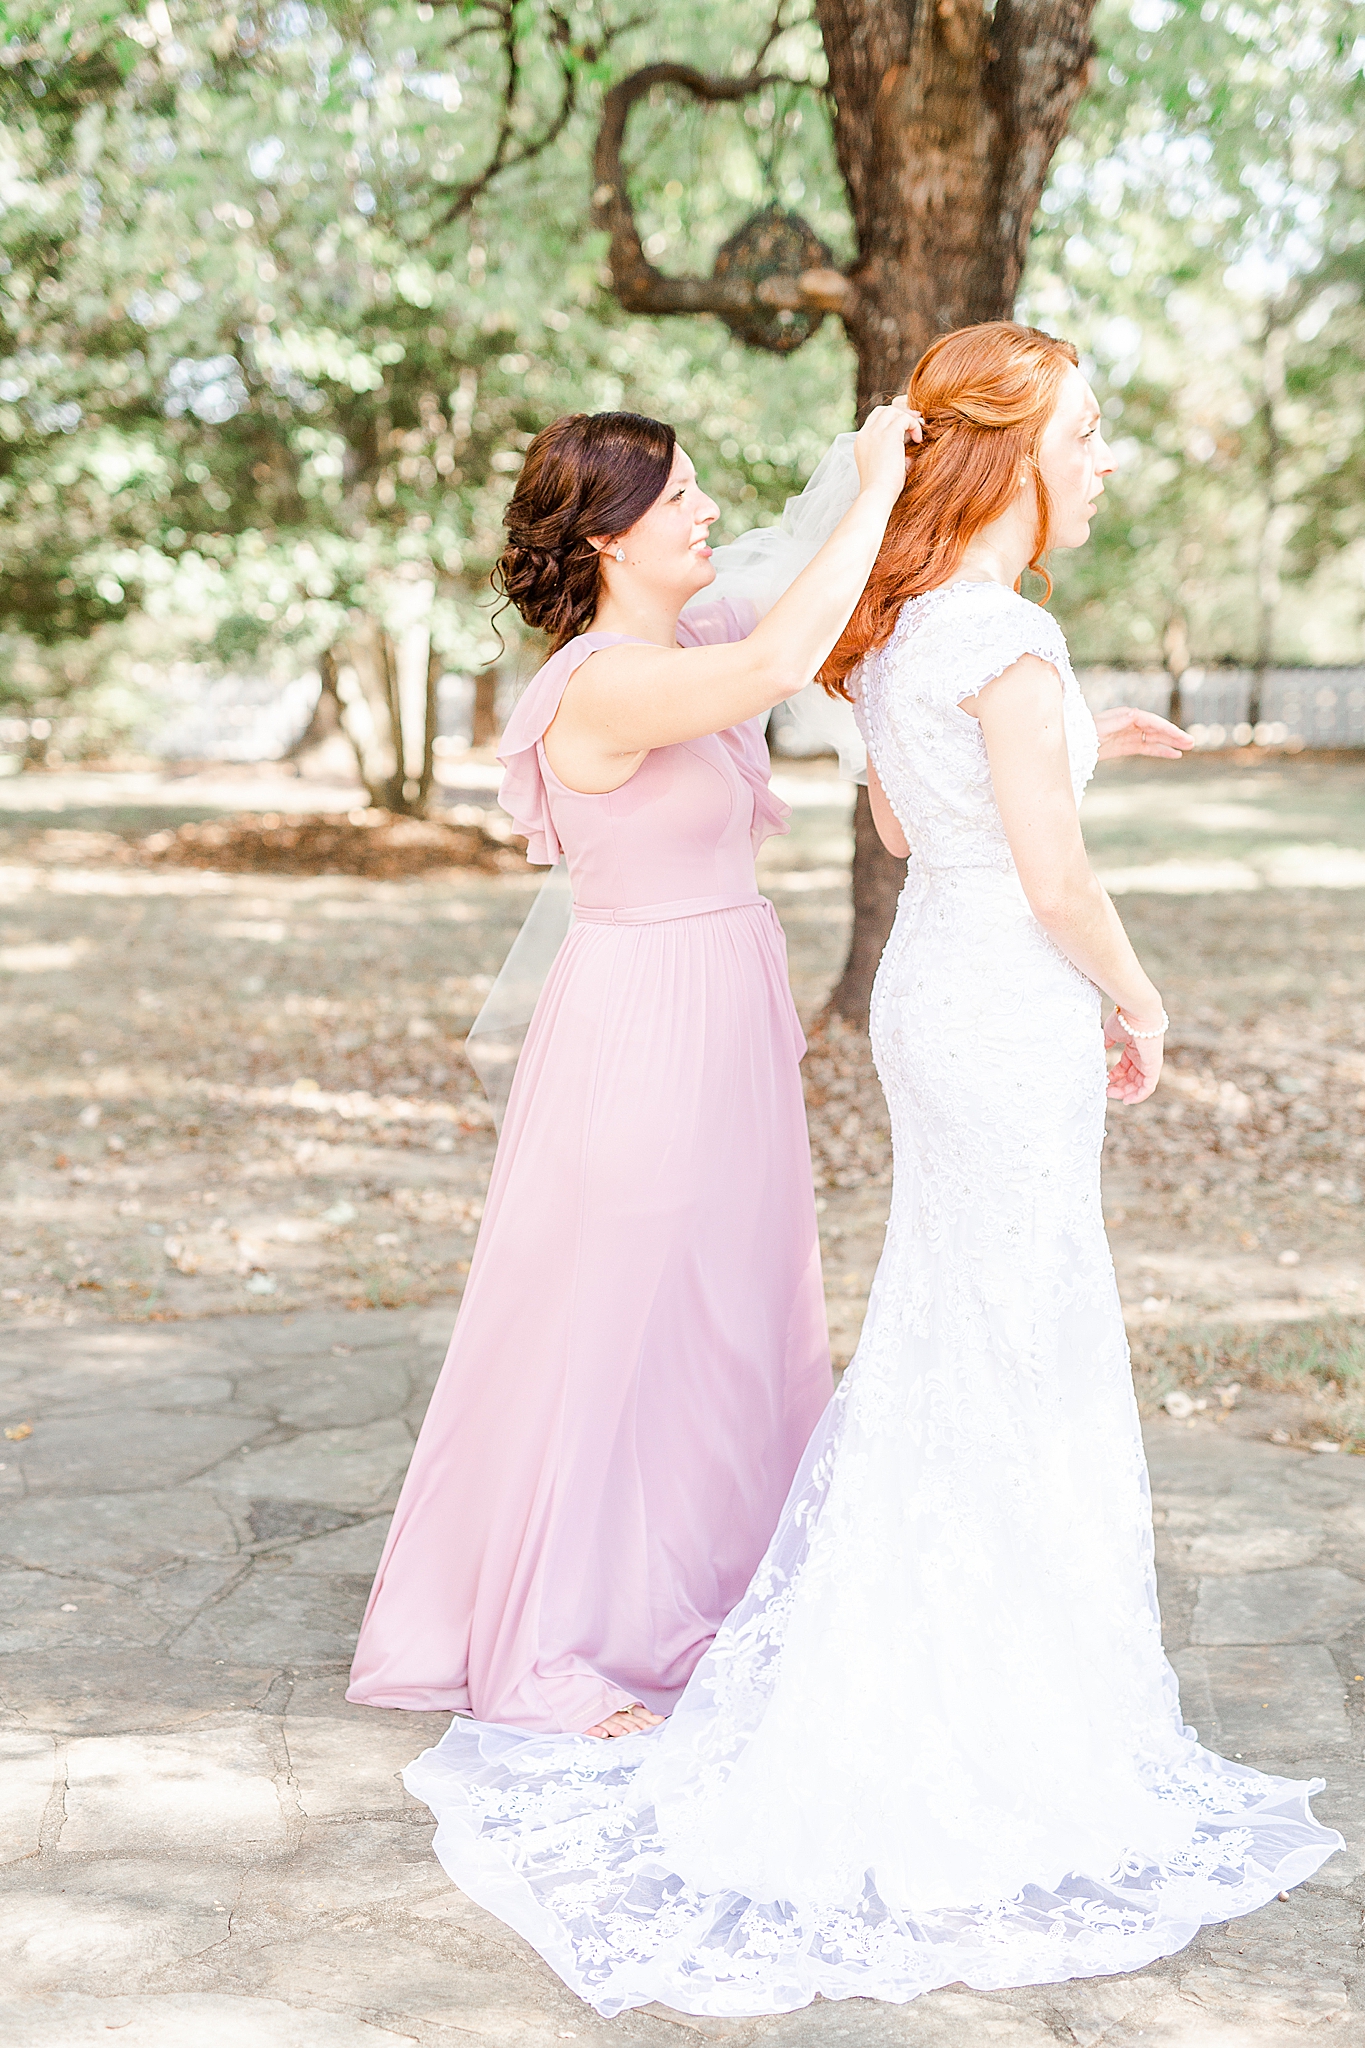 bridesmaid helps attach veil to bride's hair